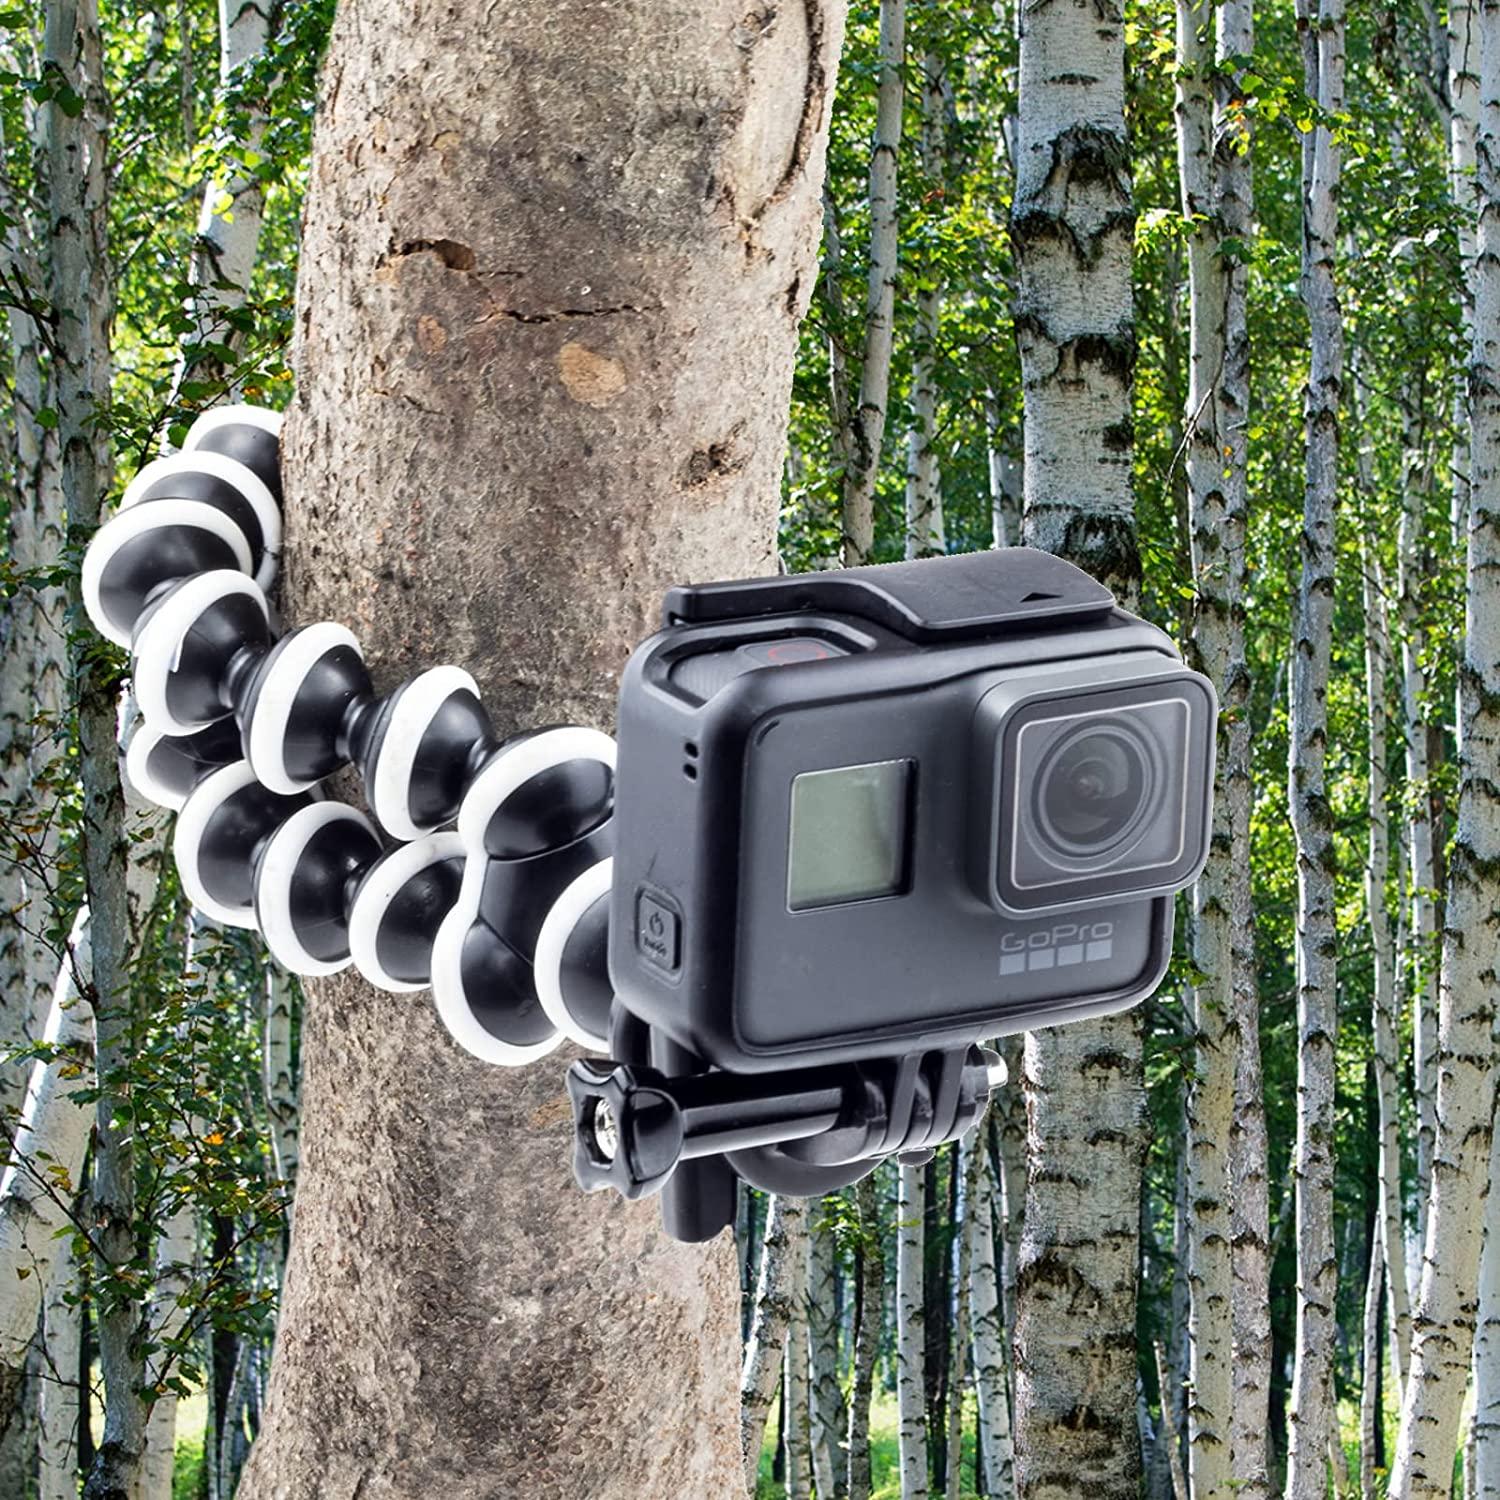 Flexible 11 Tripod for GoPro HERO Action Cameras — Arkon Mounts